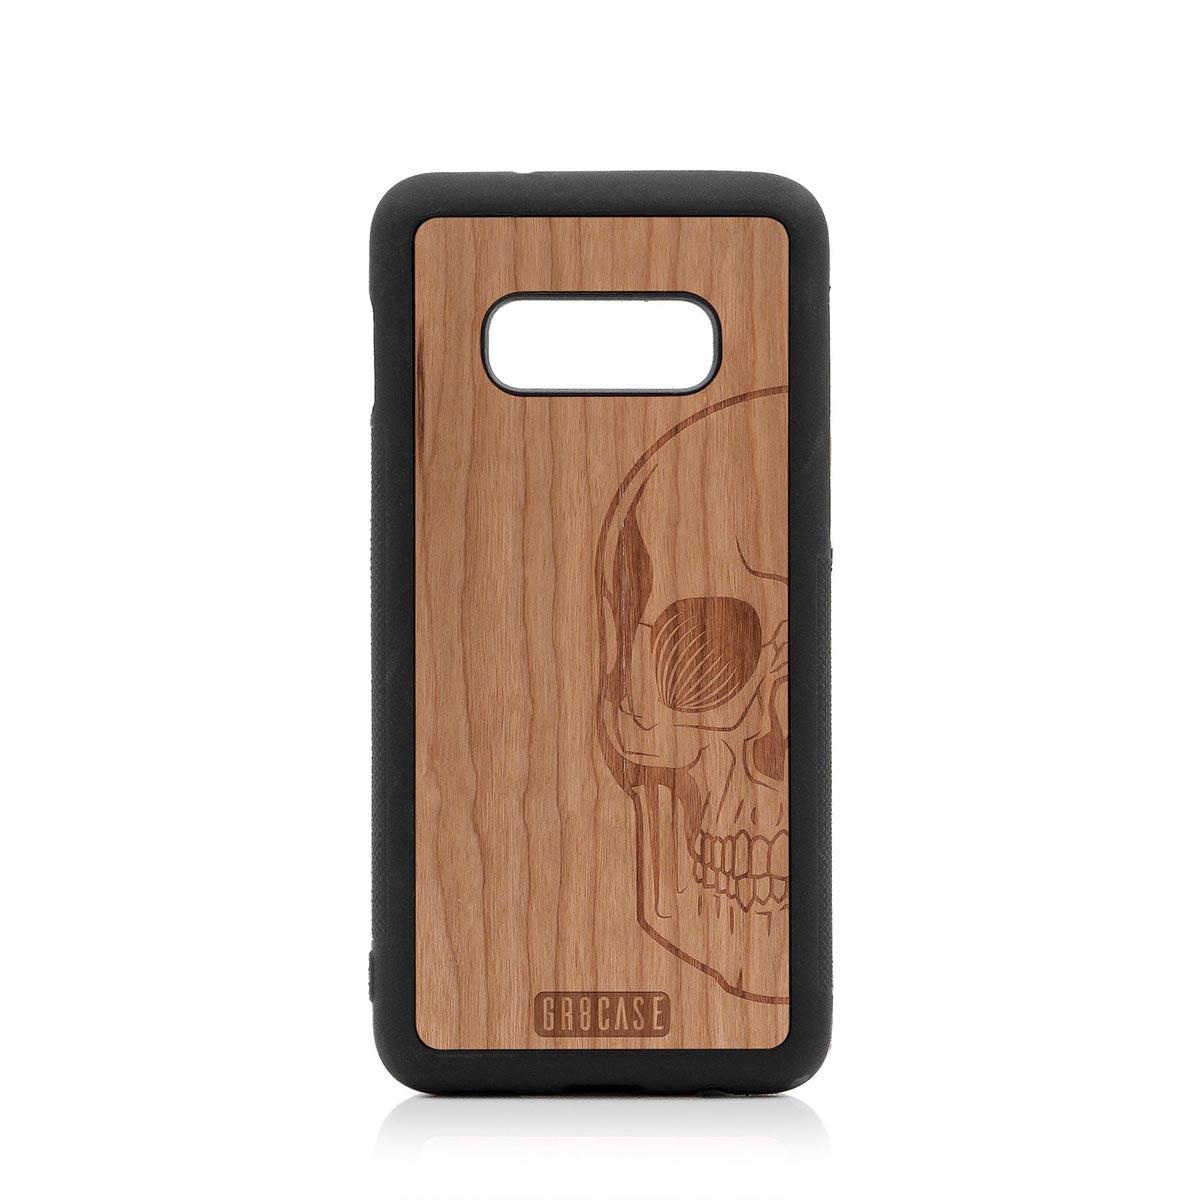 Half Skull Design Wood Case Samsung Galaxy S10E by GR8CASE